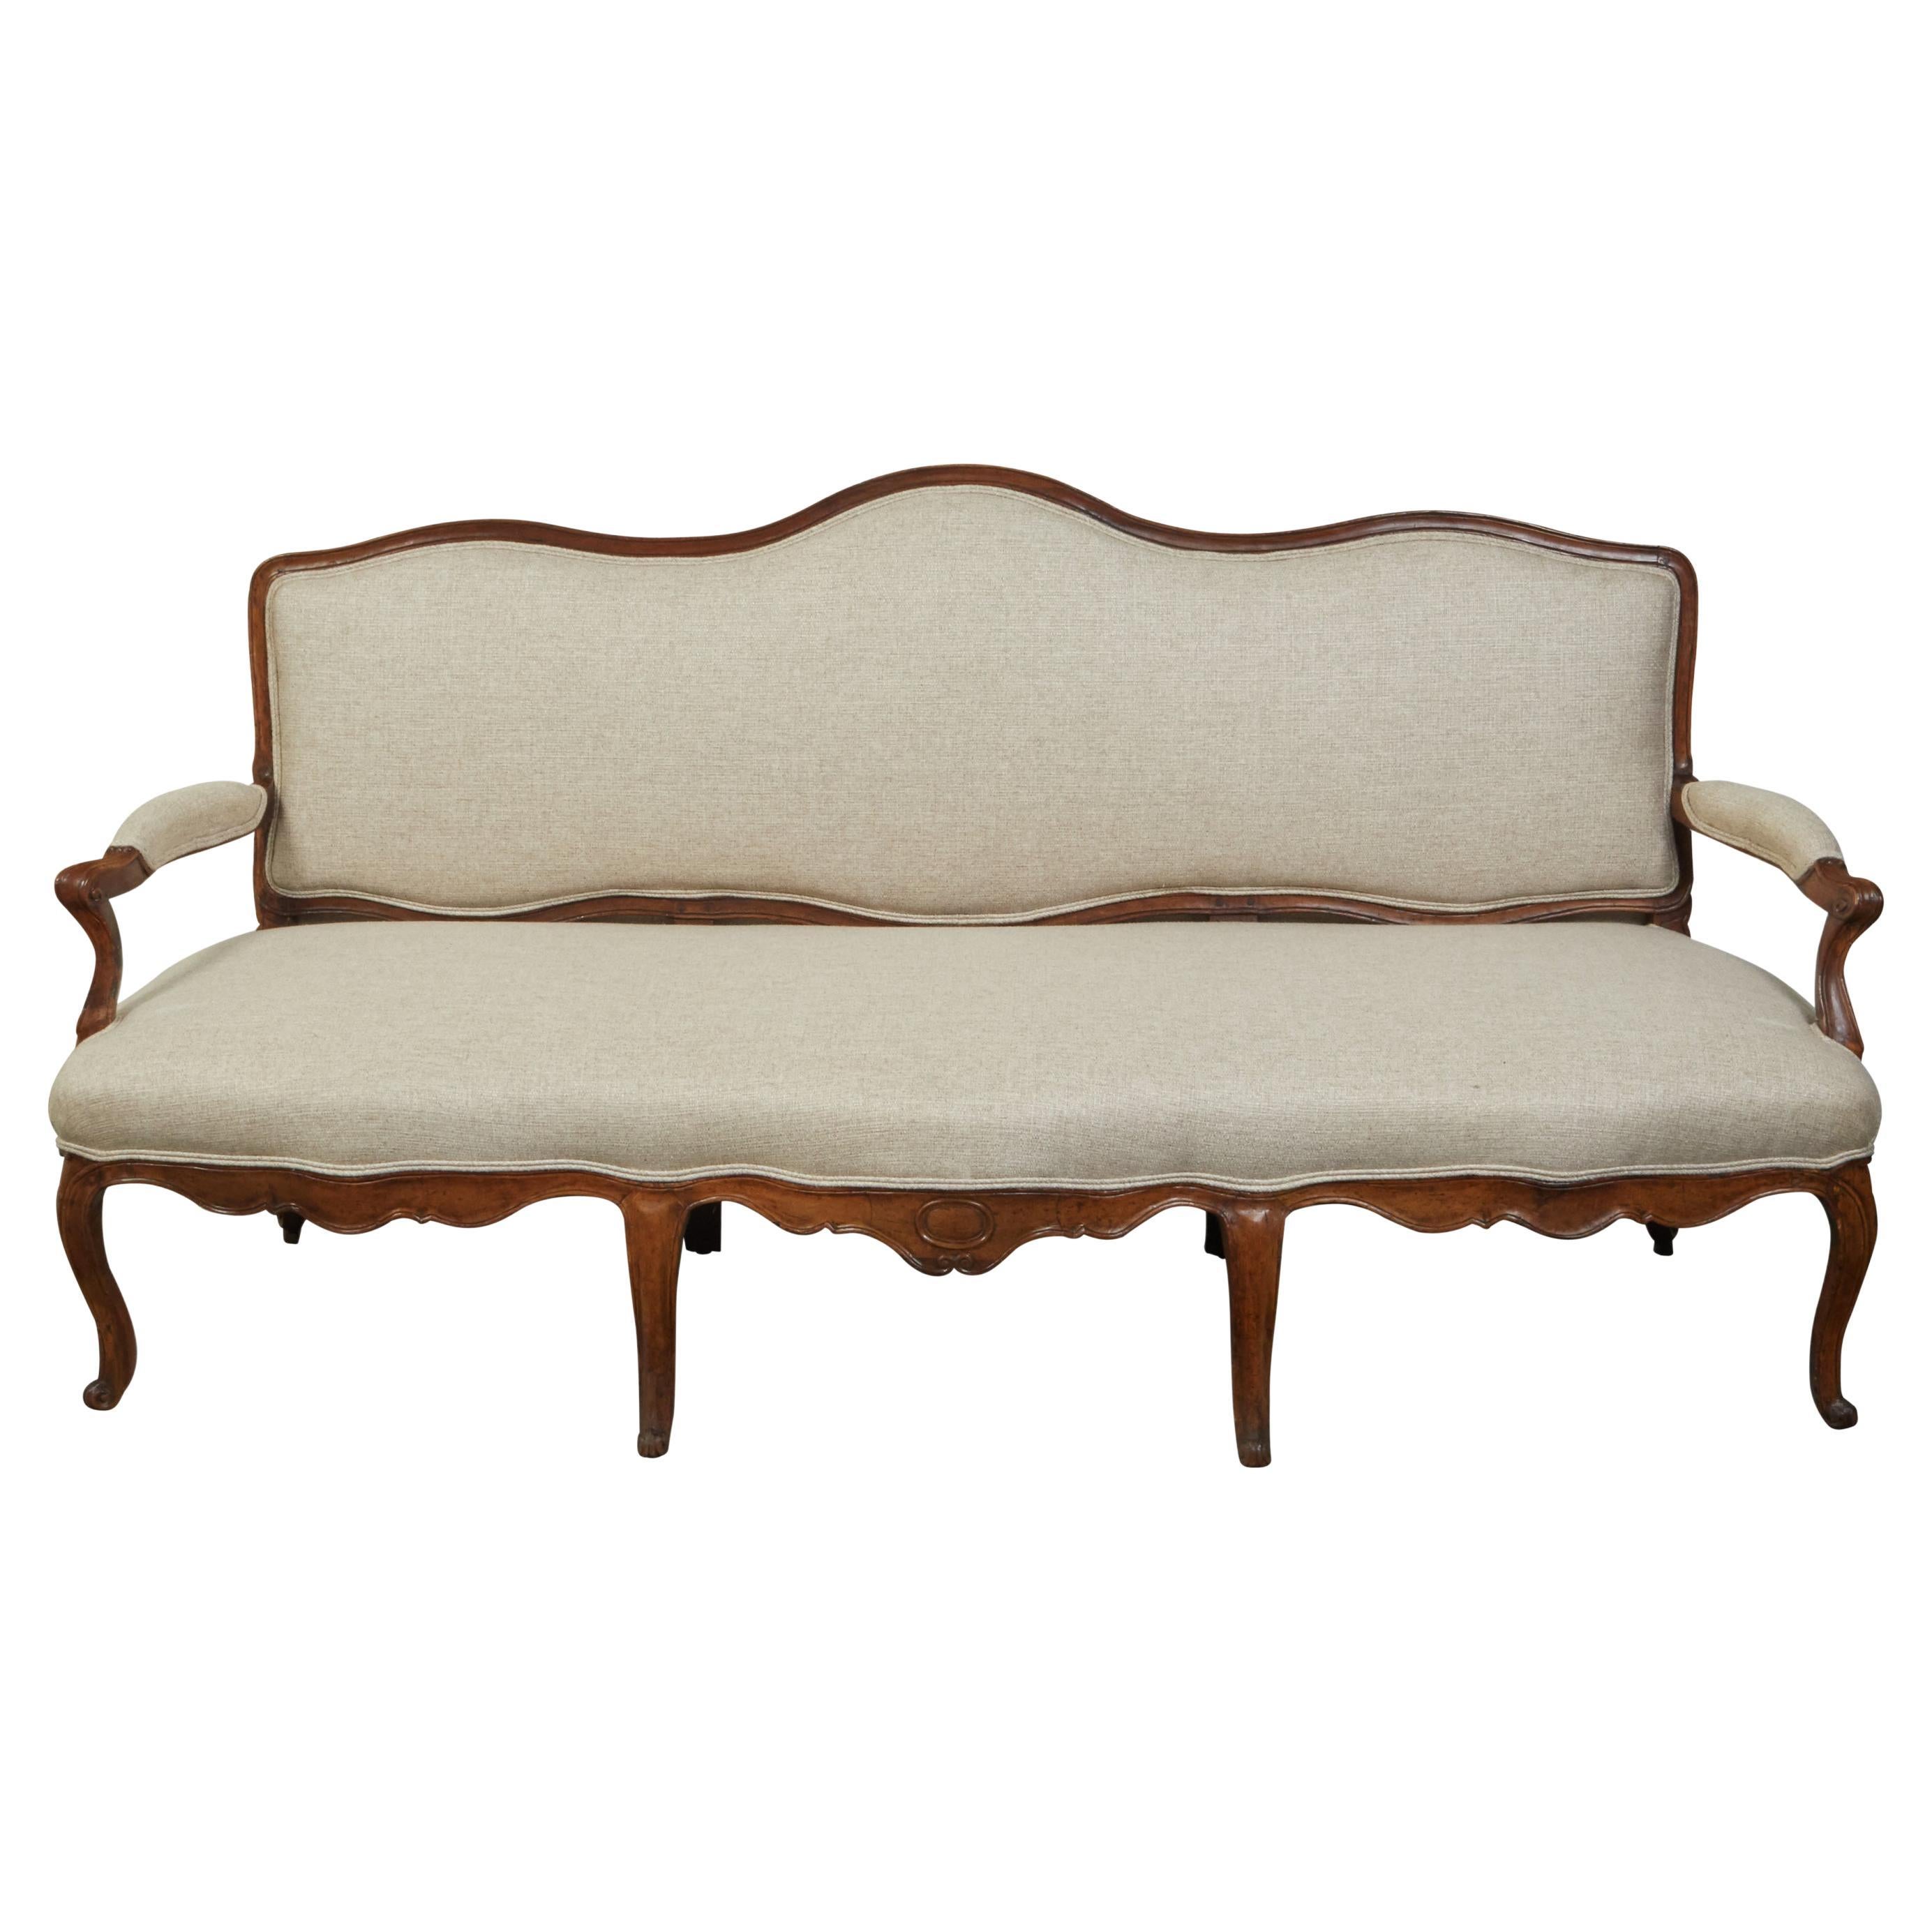 Italian 18th Century Rococo Walnut Sofa with Cabriole Legs and New Upholstery